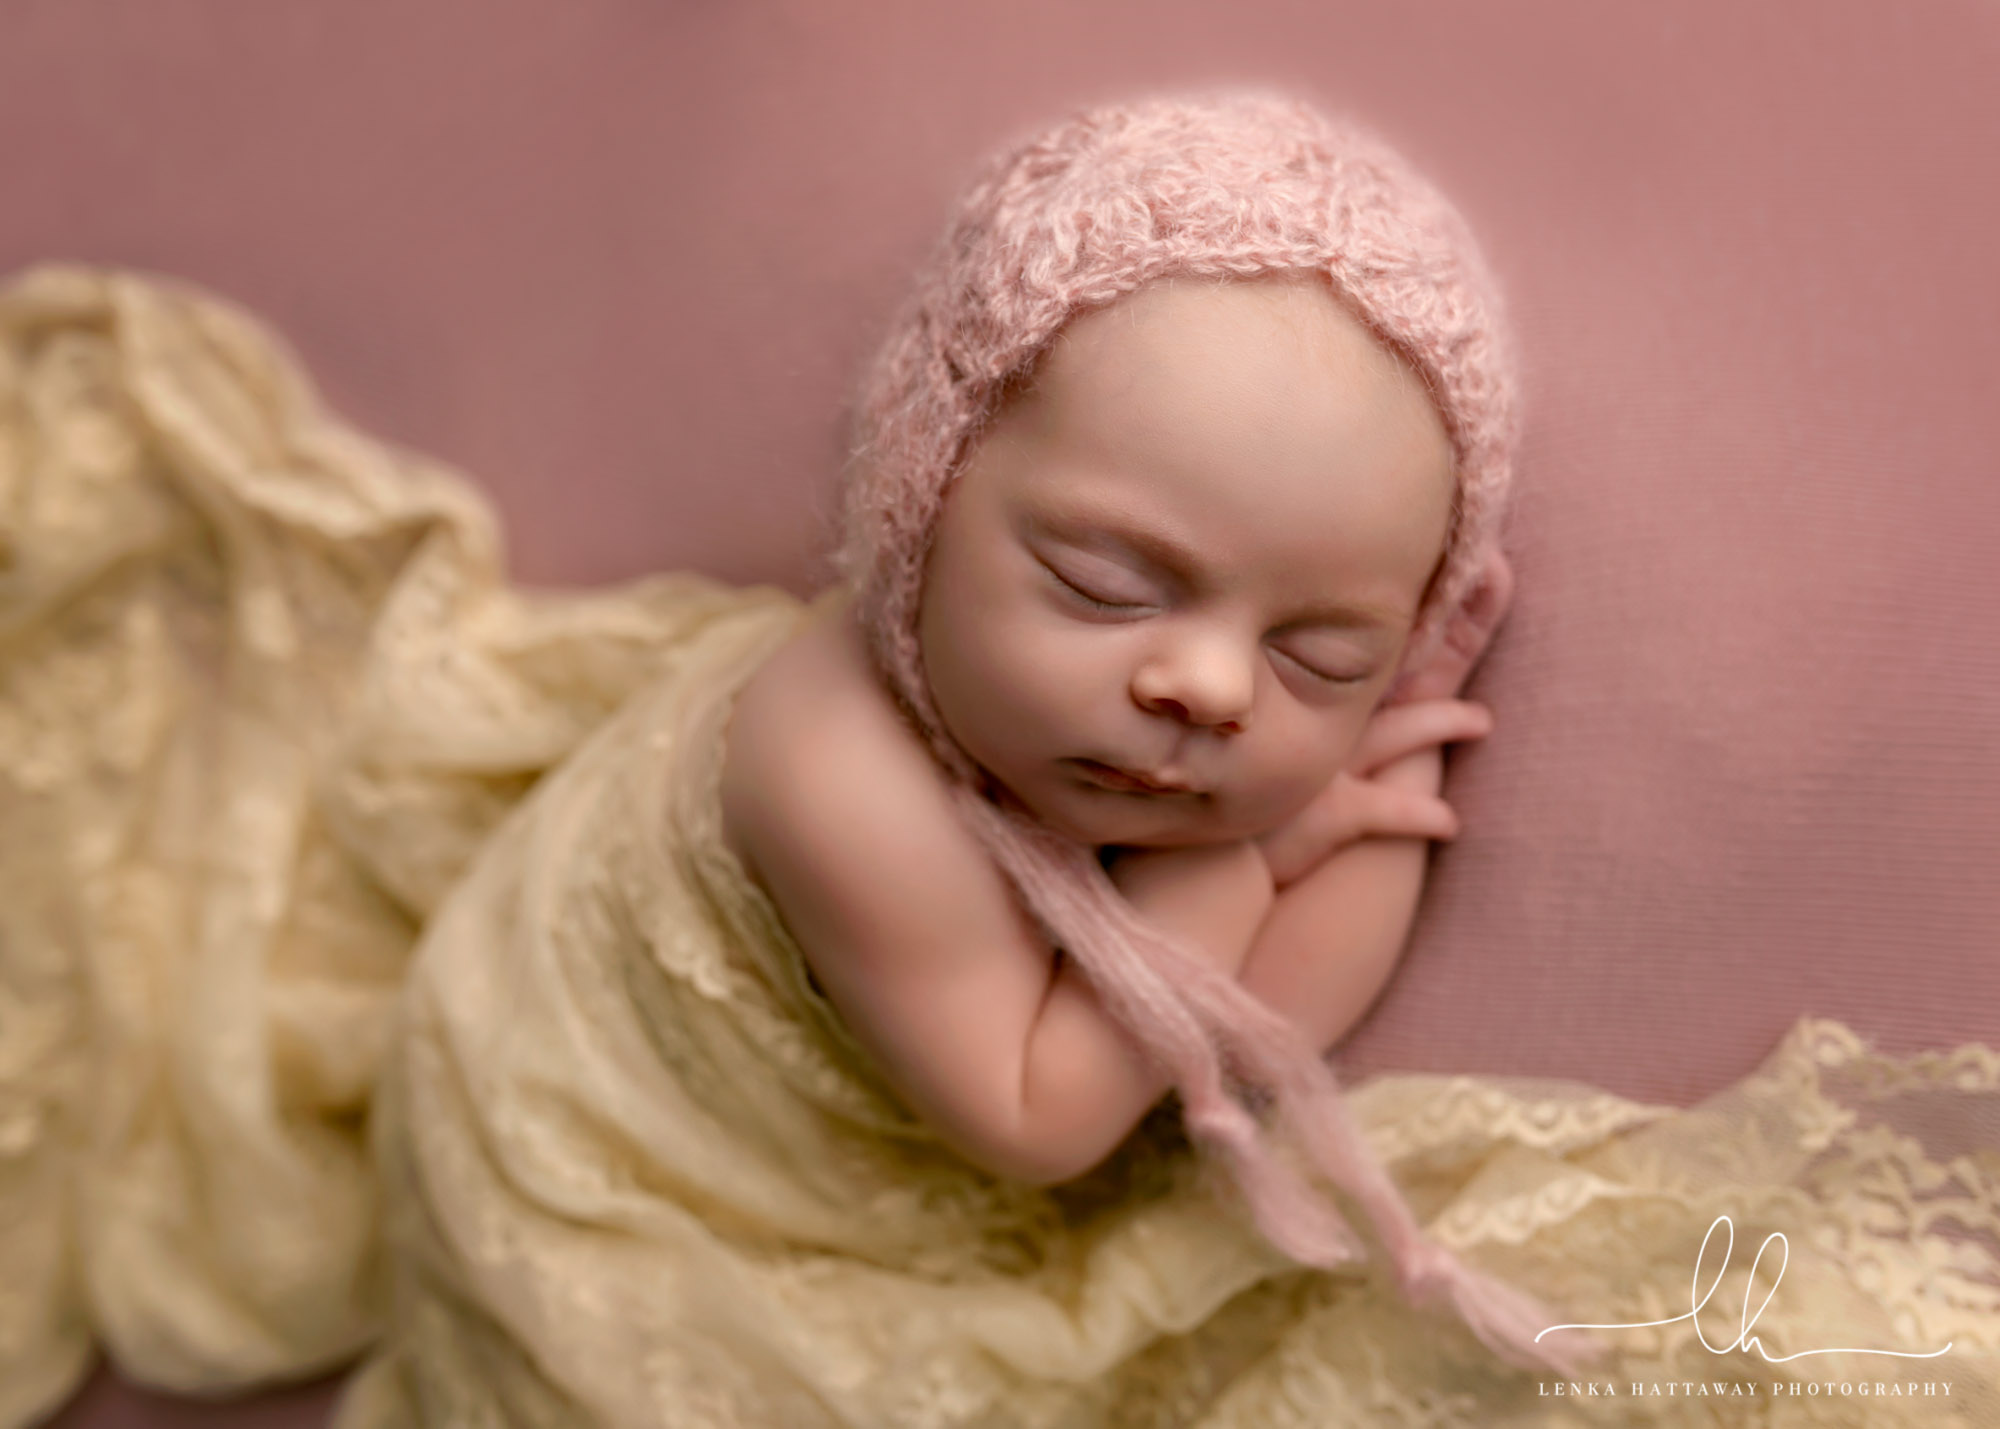 Adorable newborn photo of a sleeping baby.